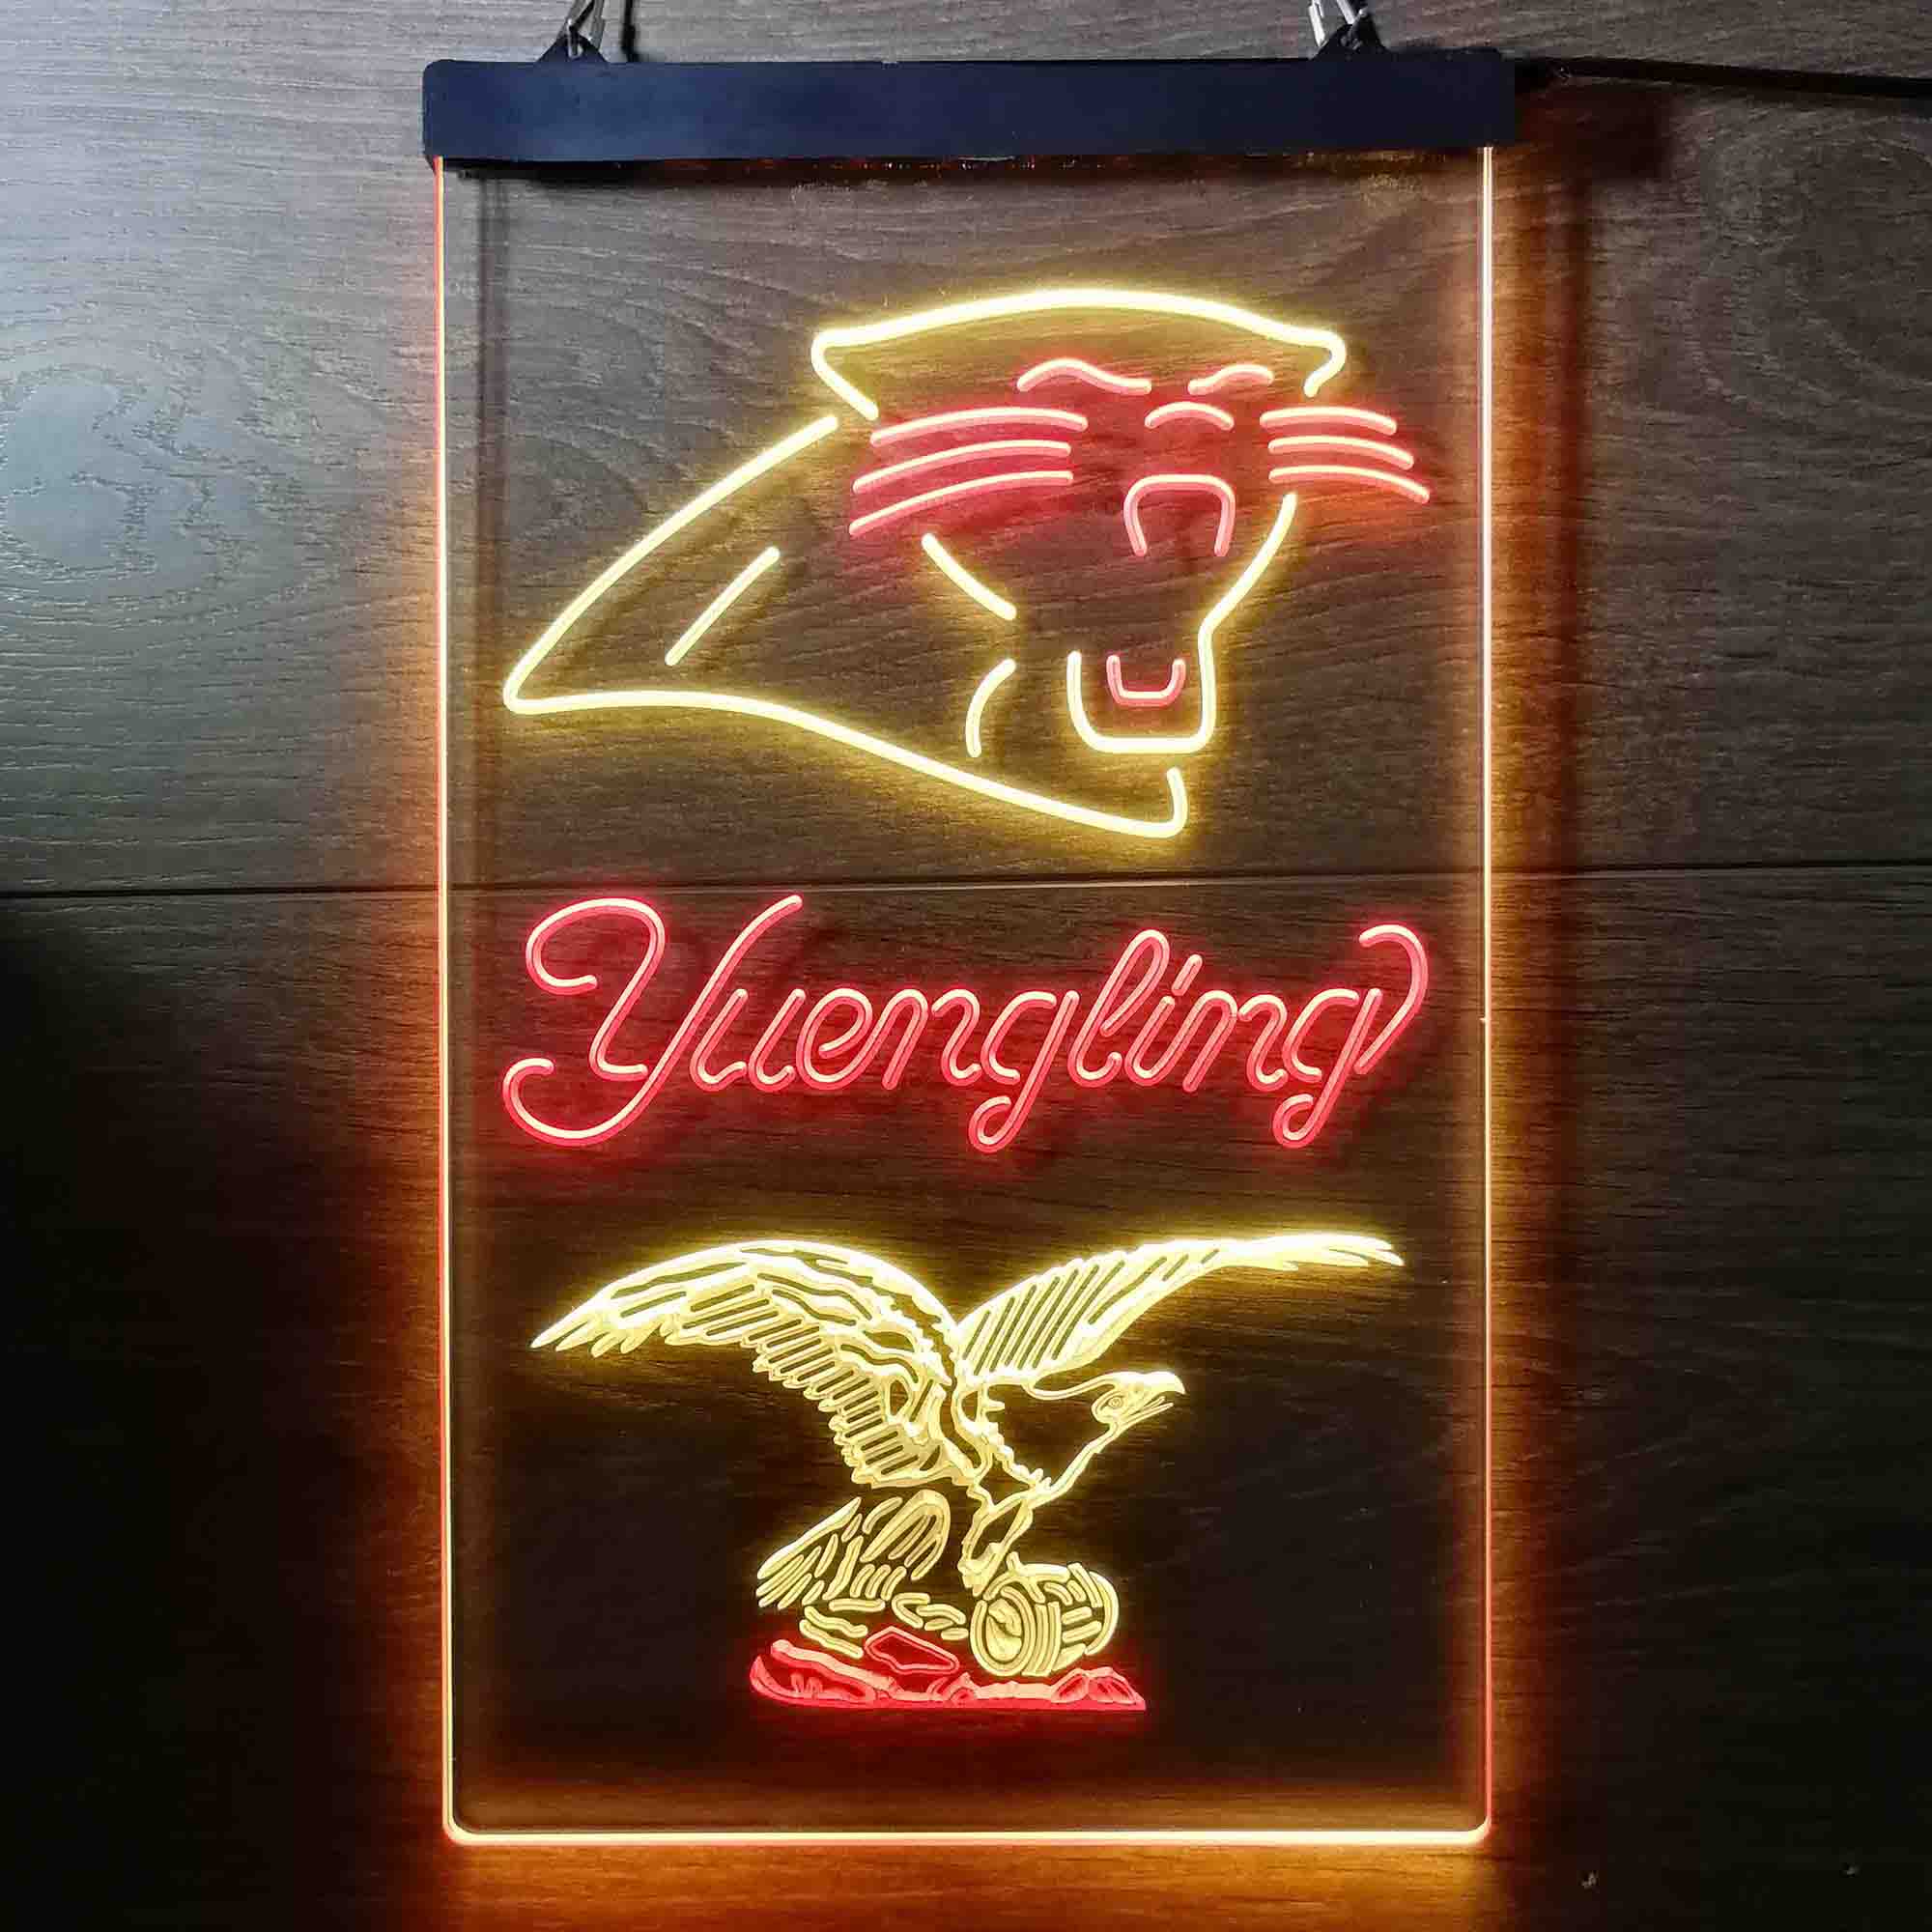 Yuengling Bar Carolina Panthers Est. 1995 LED Neon Sign